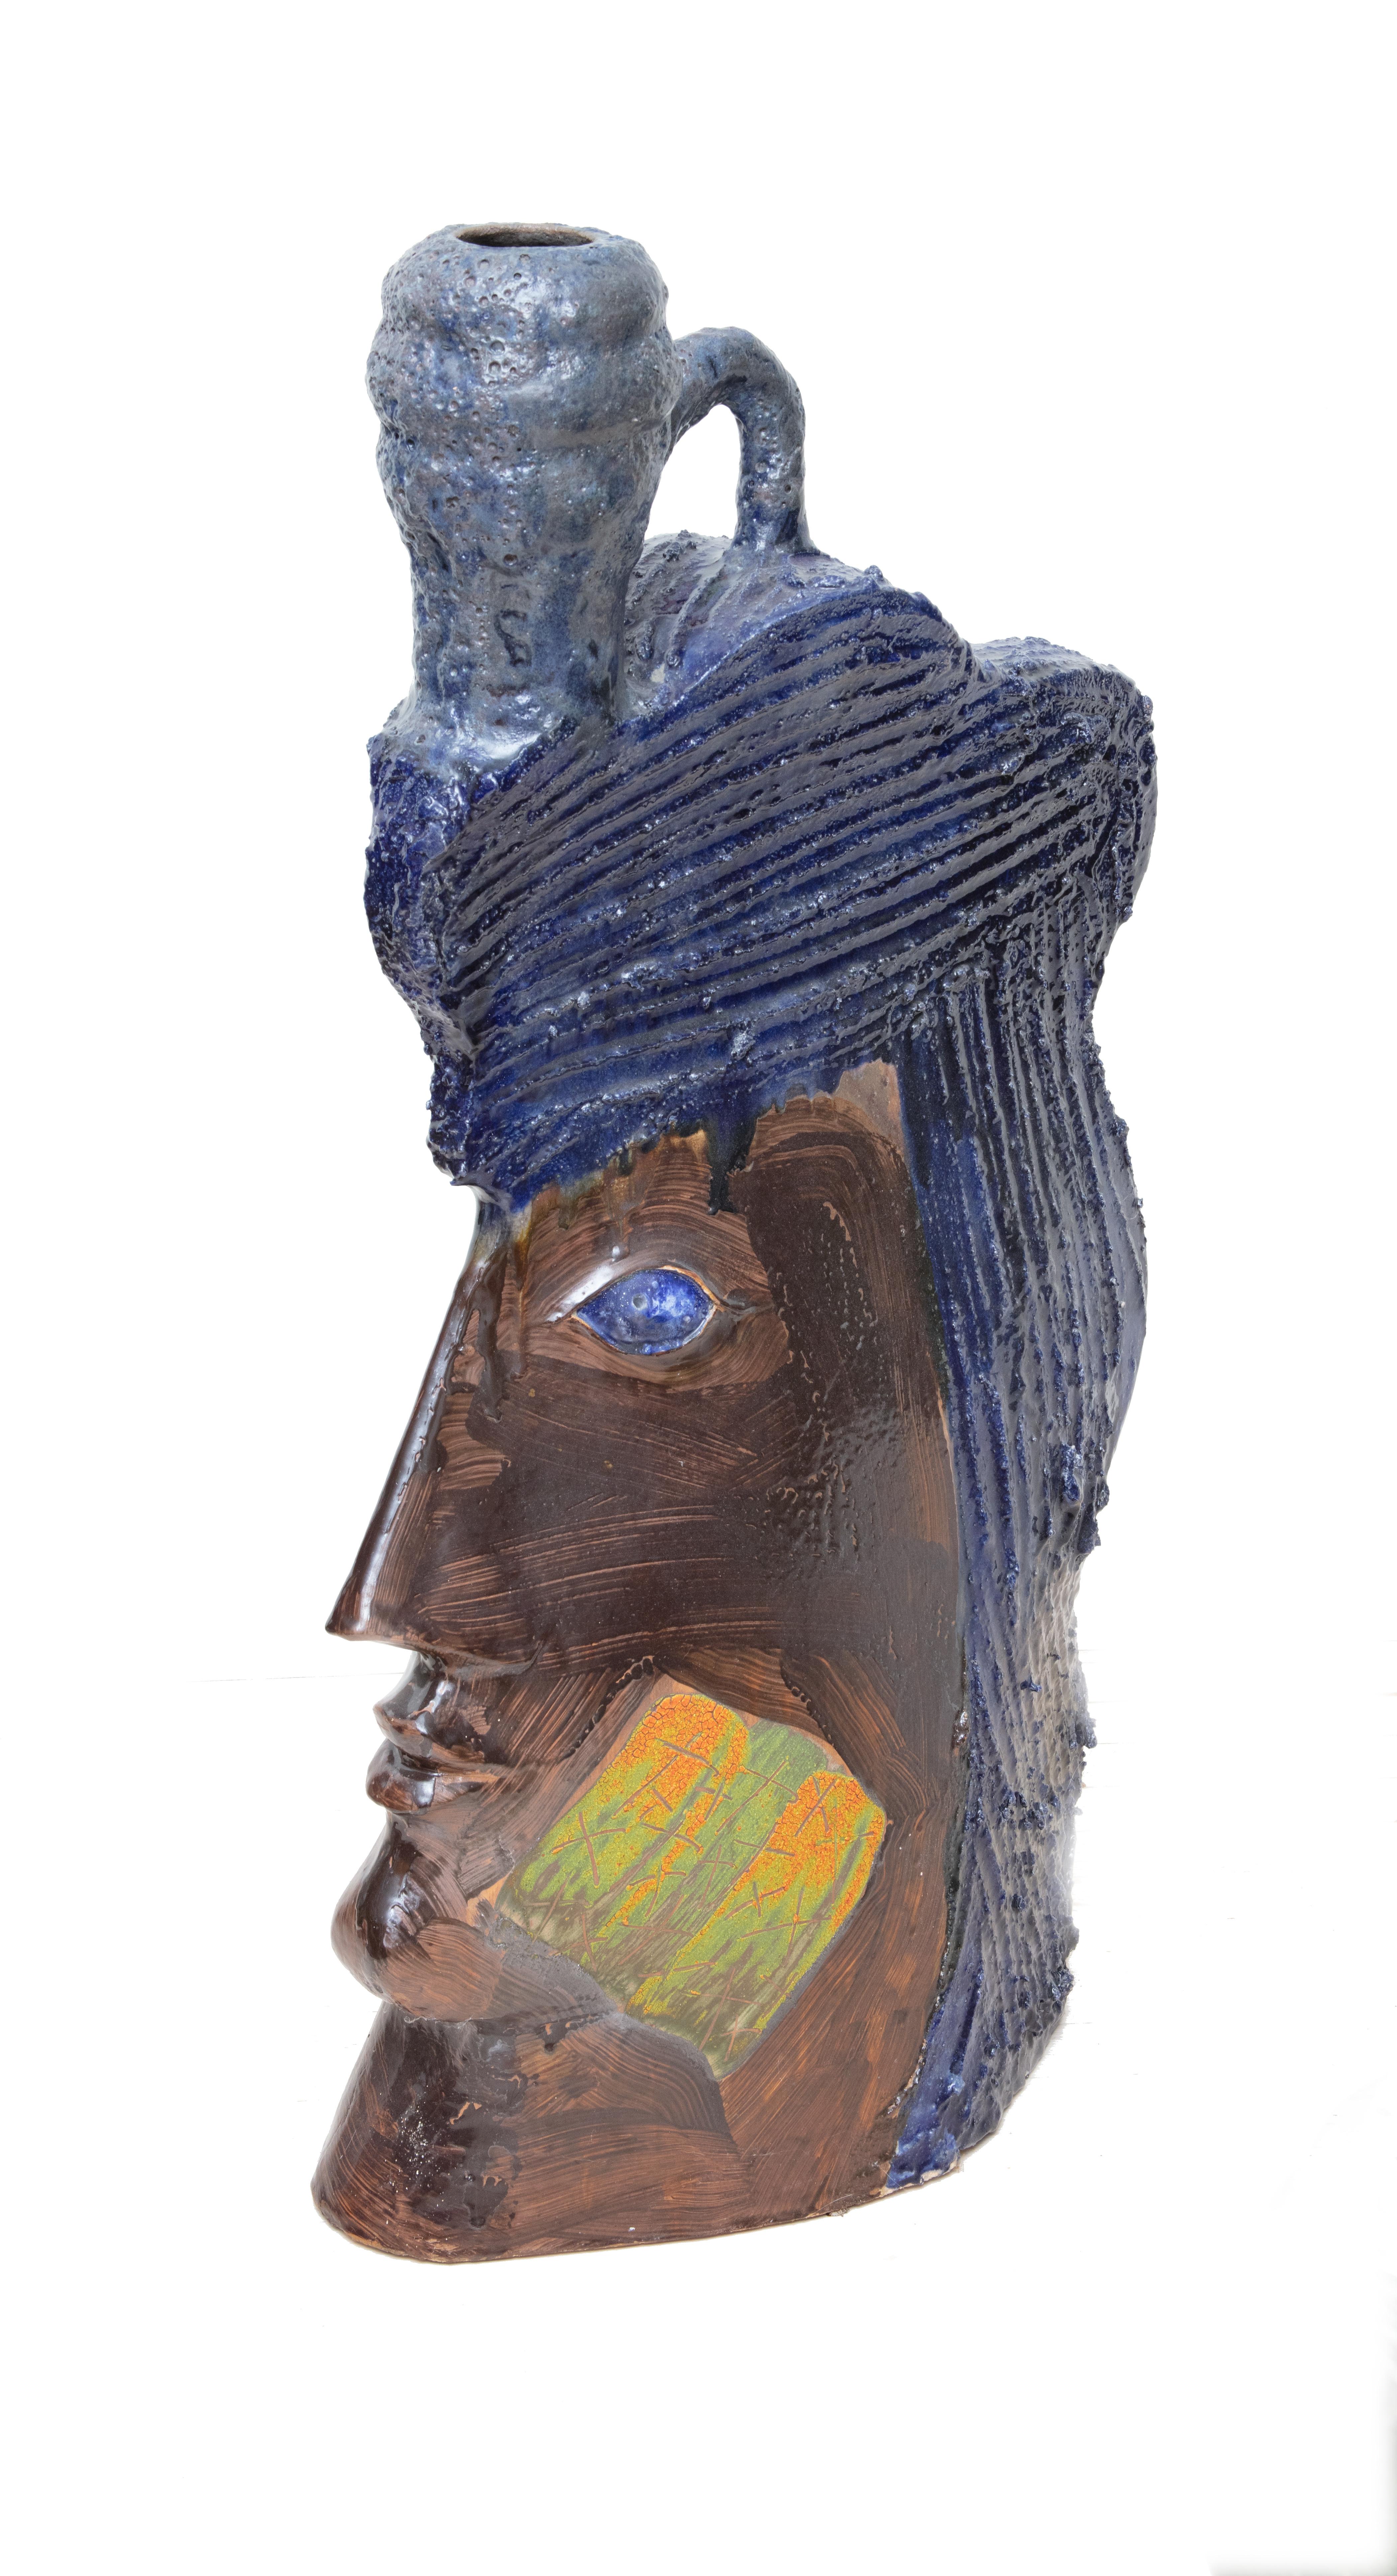 Steven Kemenyffy Figurative Sculpture - 'History of Pottery, Africa' Ceramic Sculpture